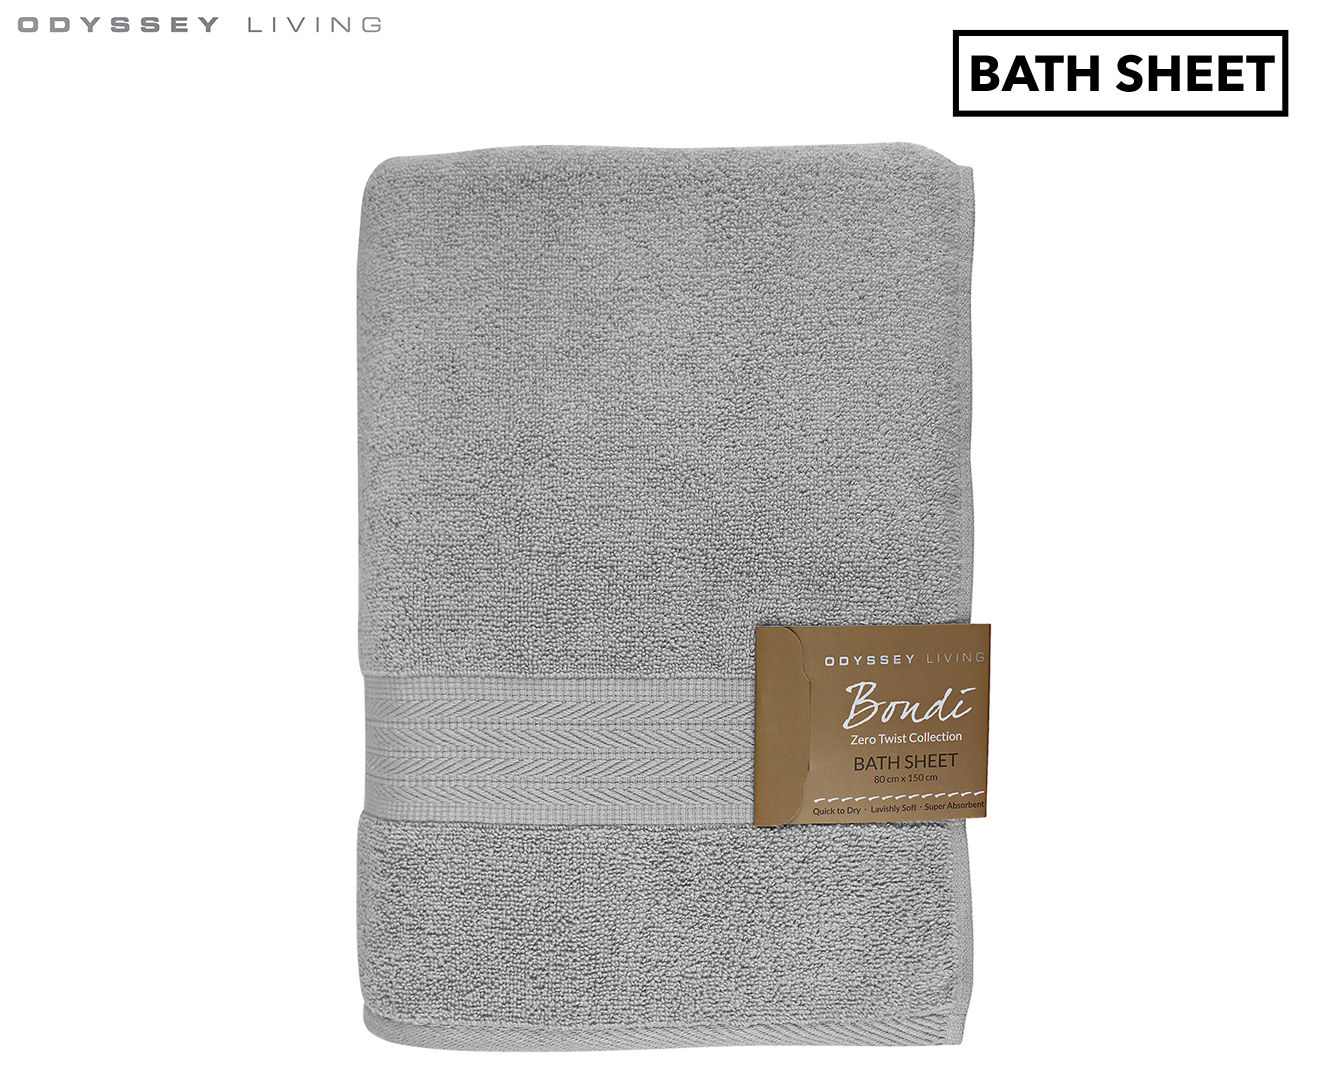 2 x Odyssey Living Bondi Zero Twist Bath Sheet - Silver Oasis | Catch.co.nz